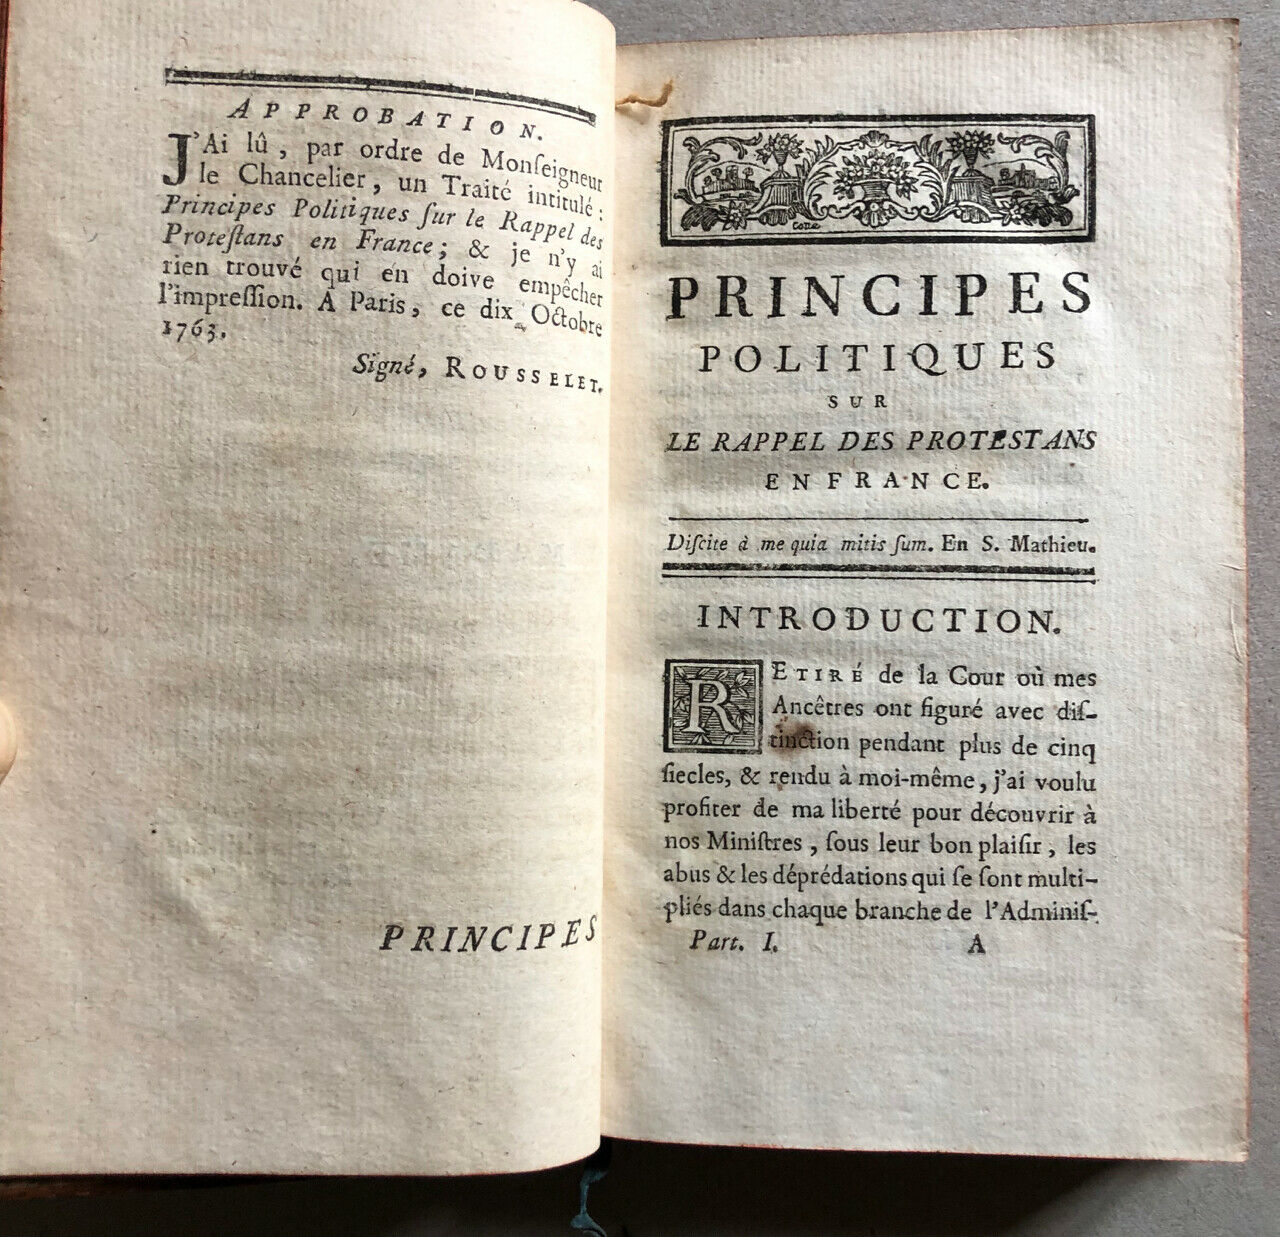 Turmeau de la Morandière — Political principles on the recall of Protestants é.o